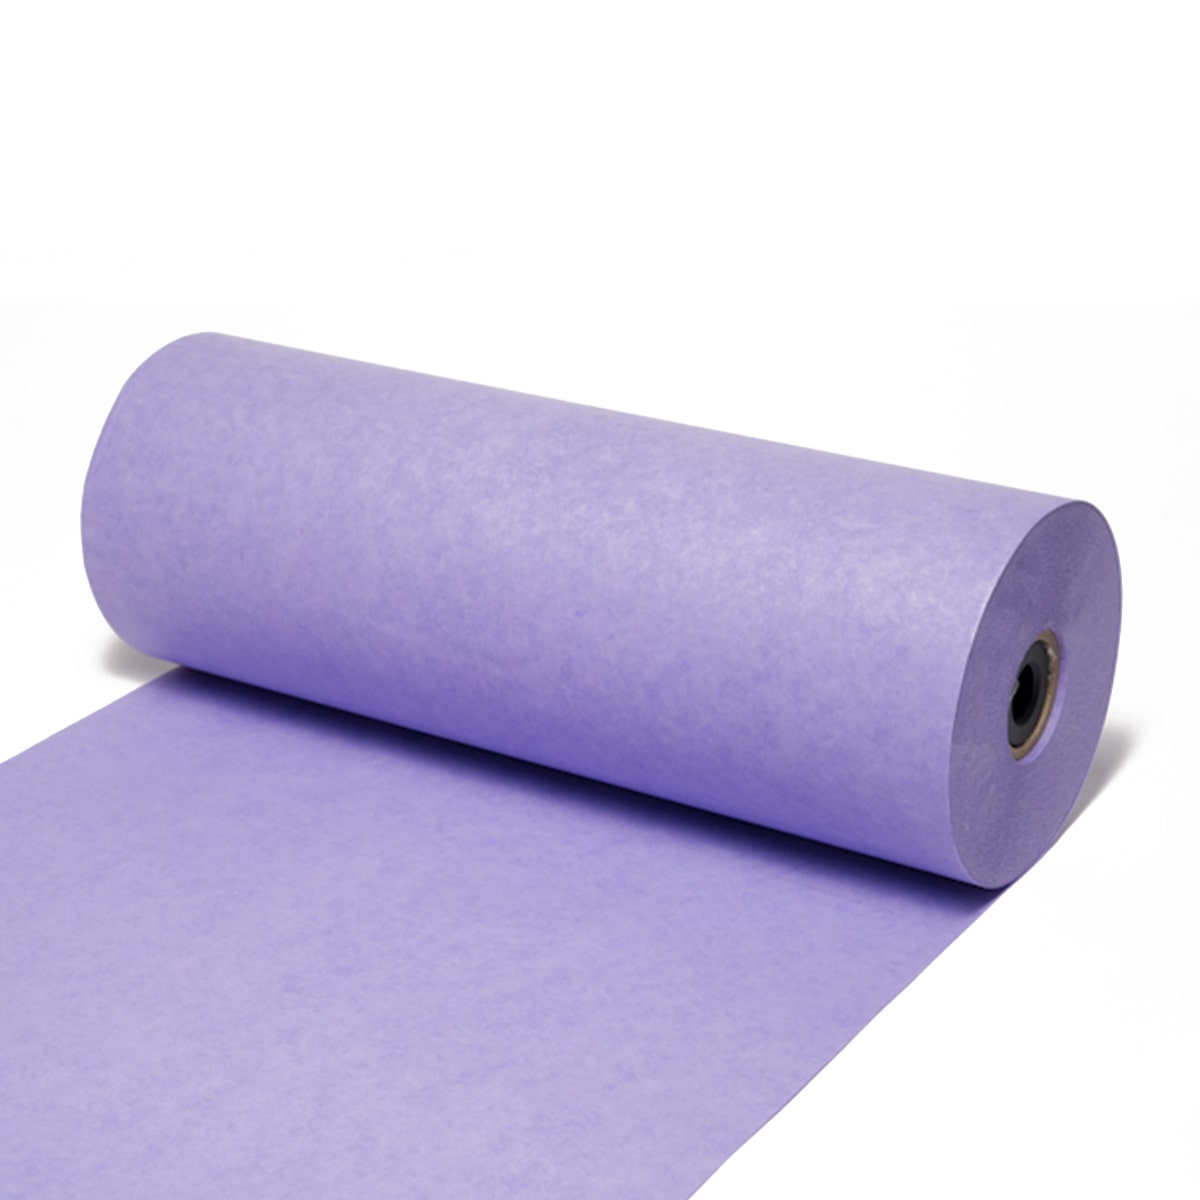 Seidenpapier Lavendel, 50 / 75 cm breit, 500 Meter / Rolle